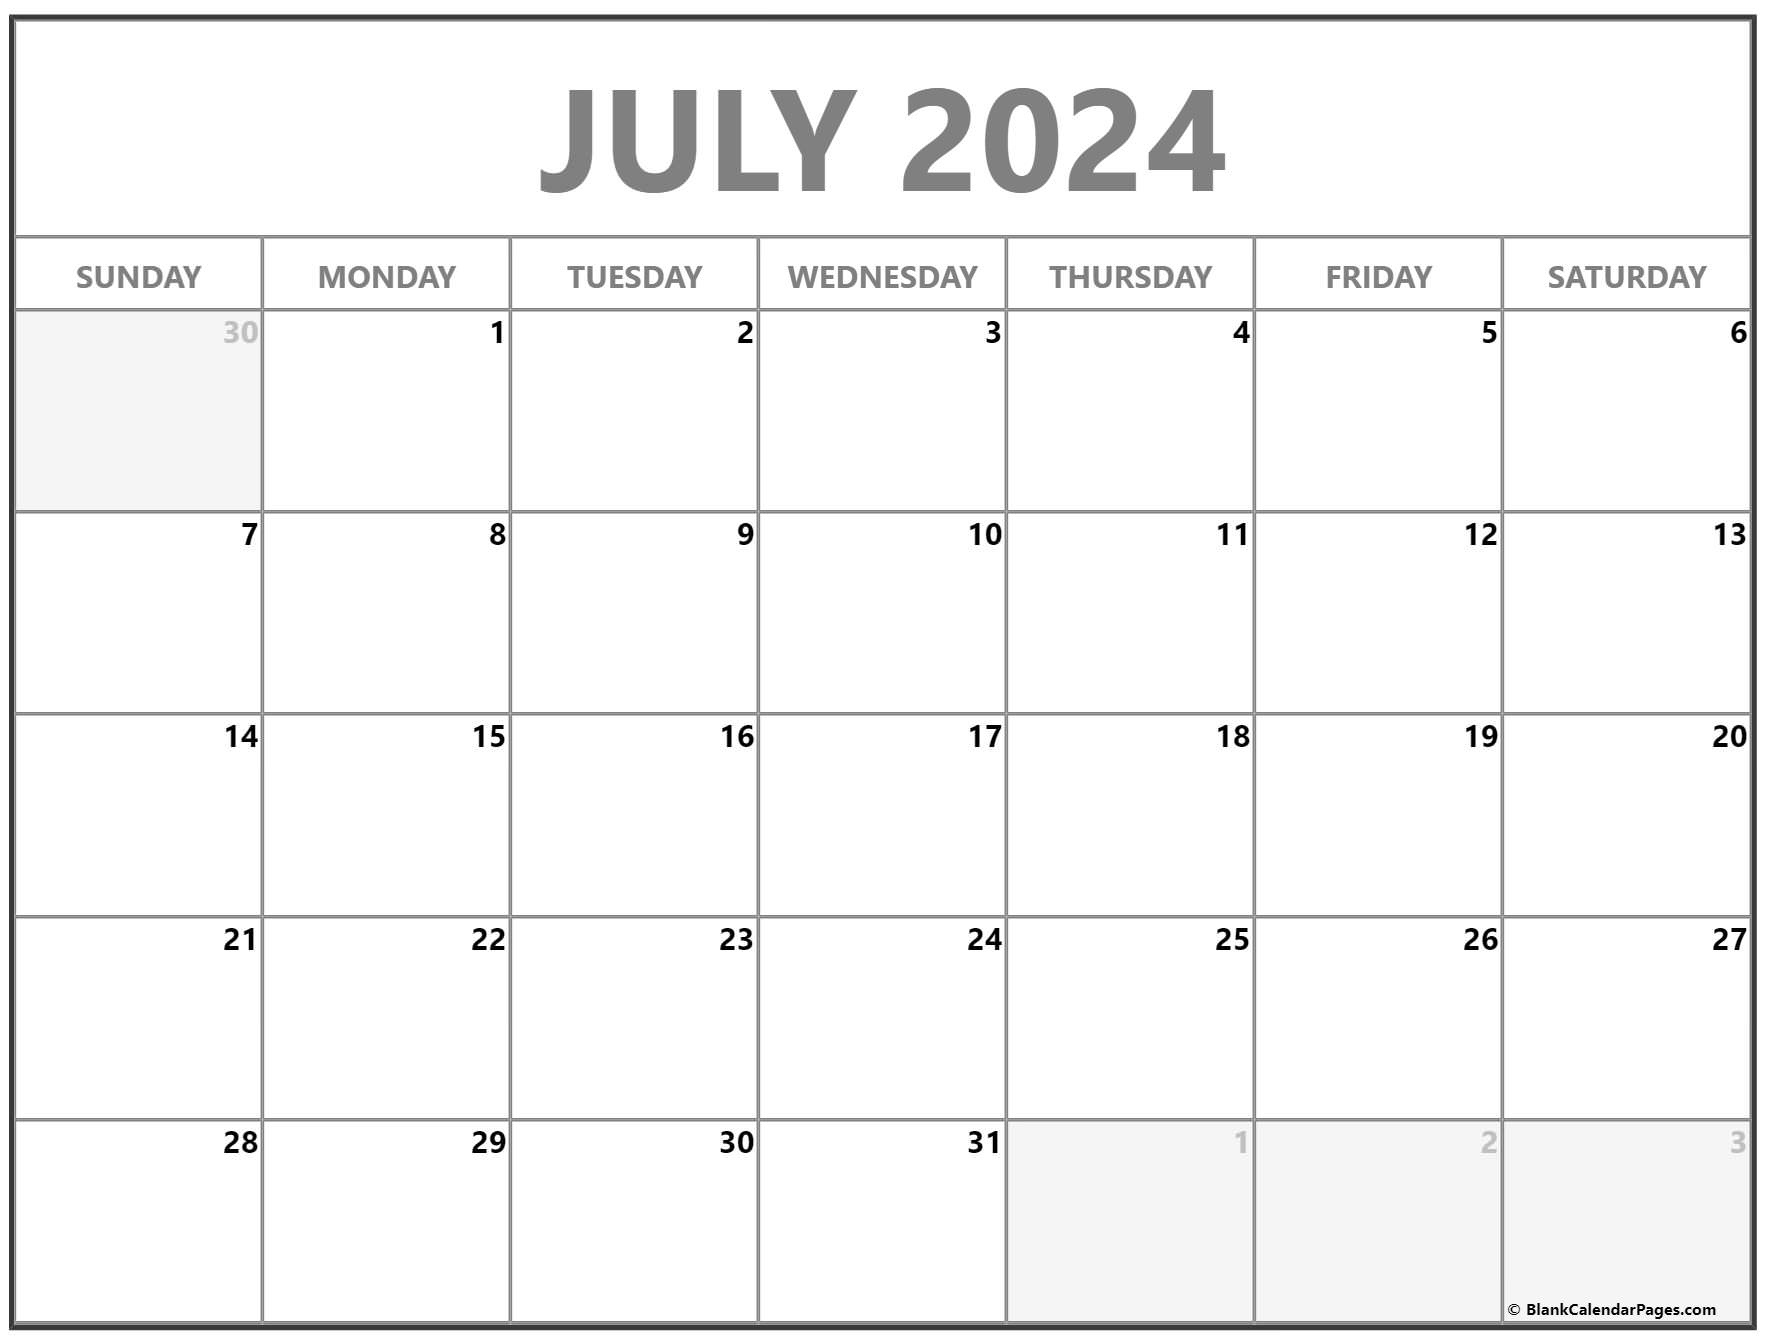 July 2024 Calendar | Free Printable Calendar | Open Calendar For July 2024